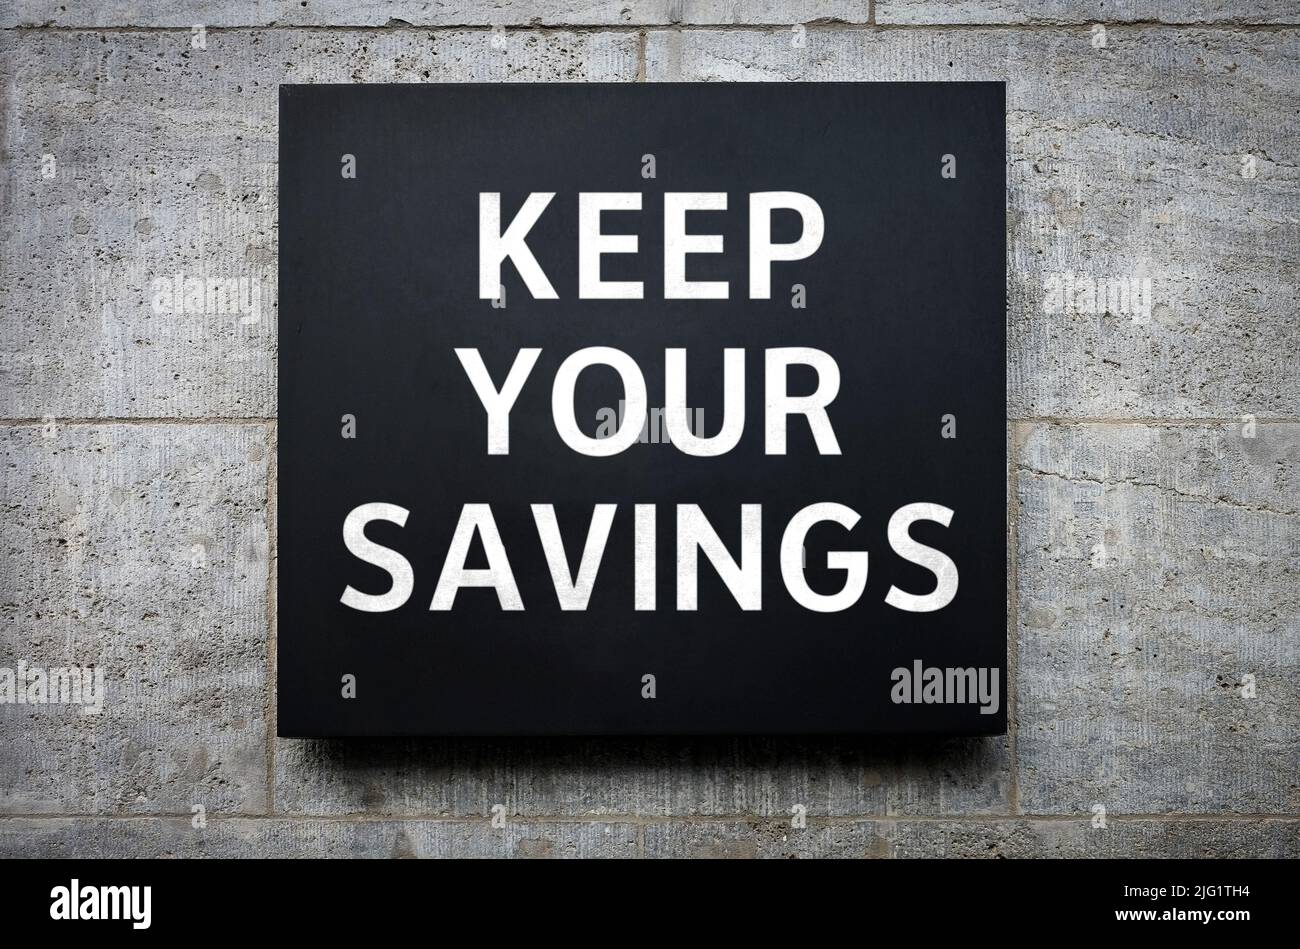 Keep your savings Stock Photo